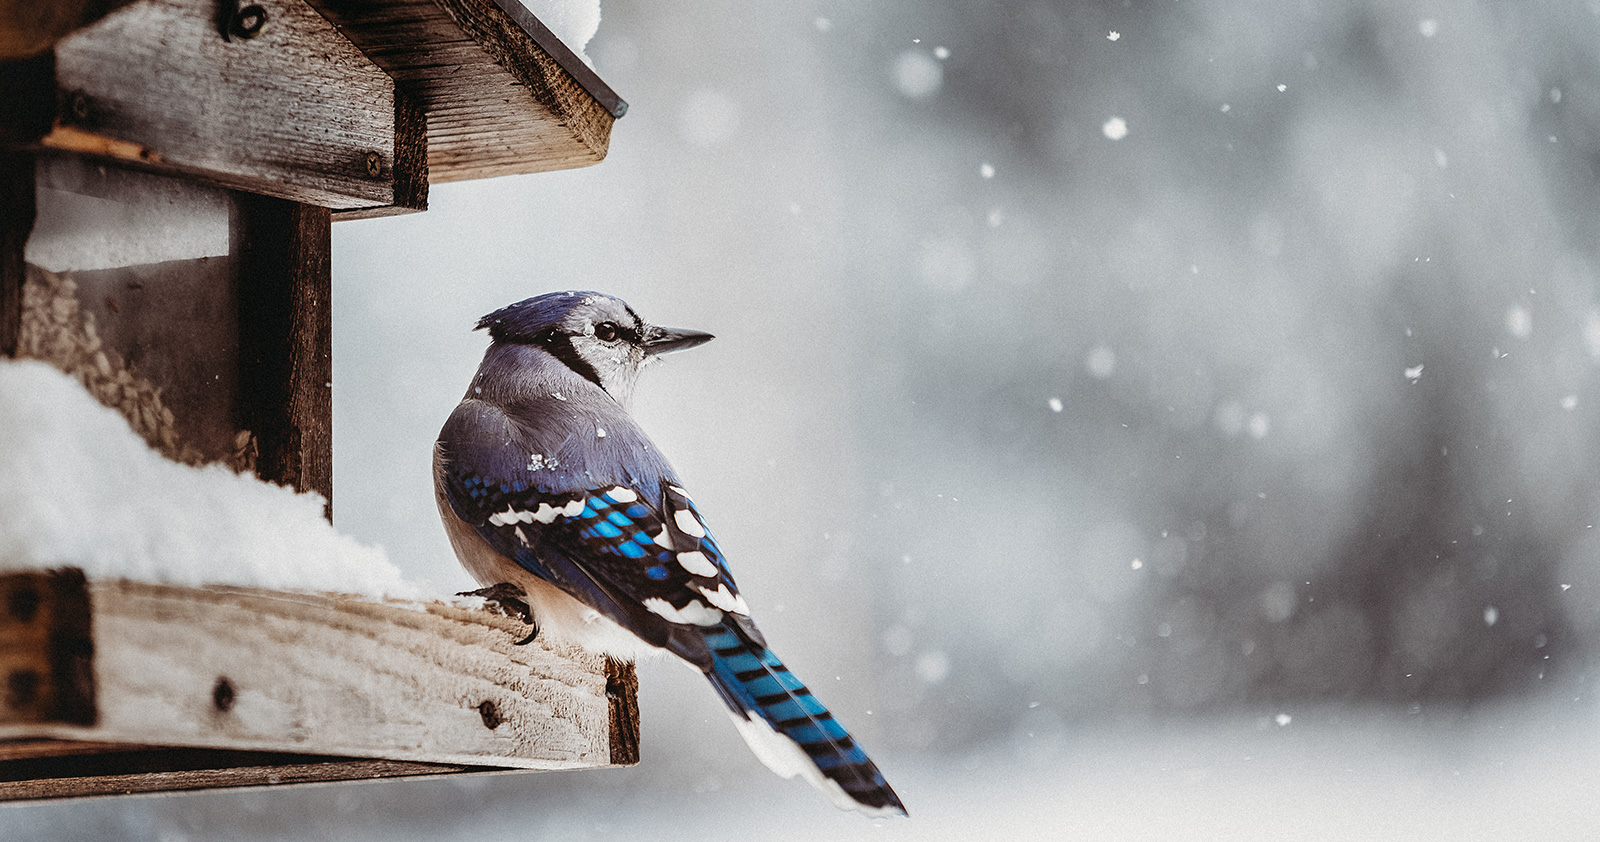 A blue jay perched on a snowy birdhouse